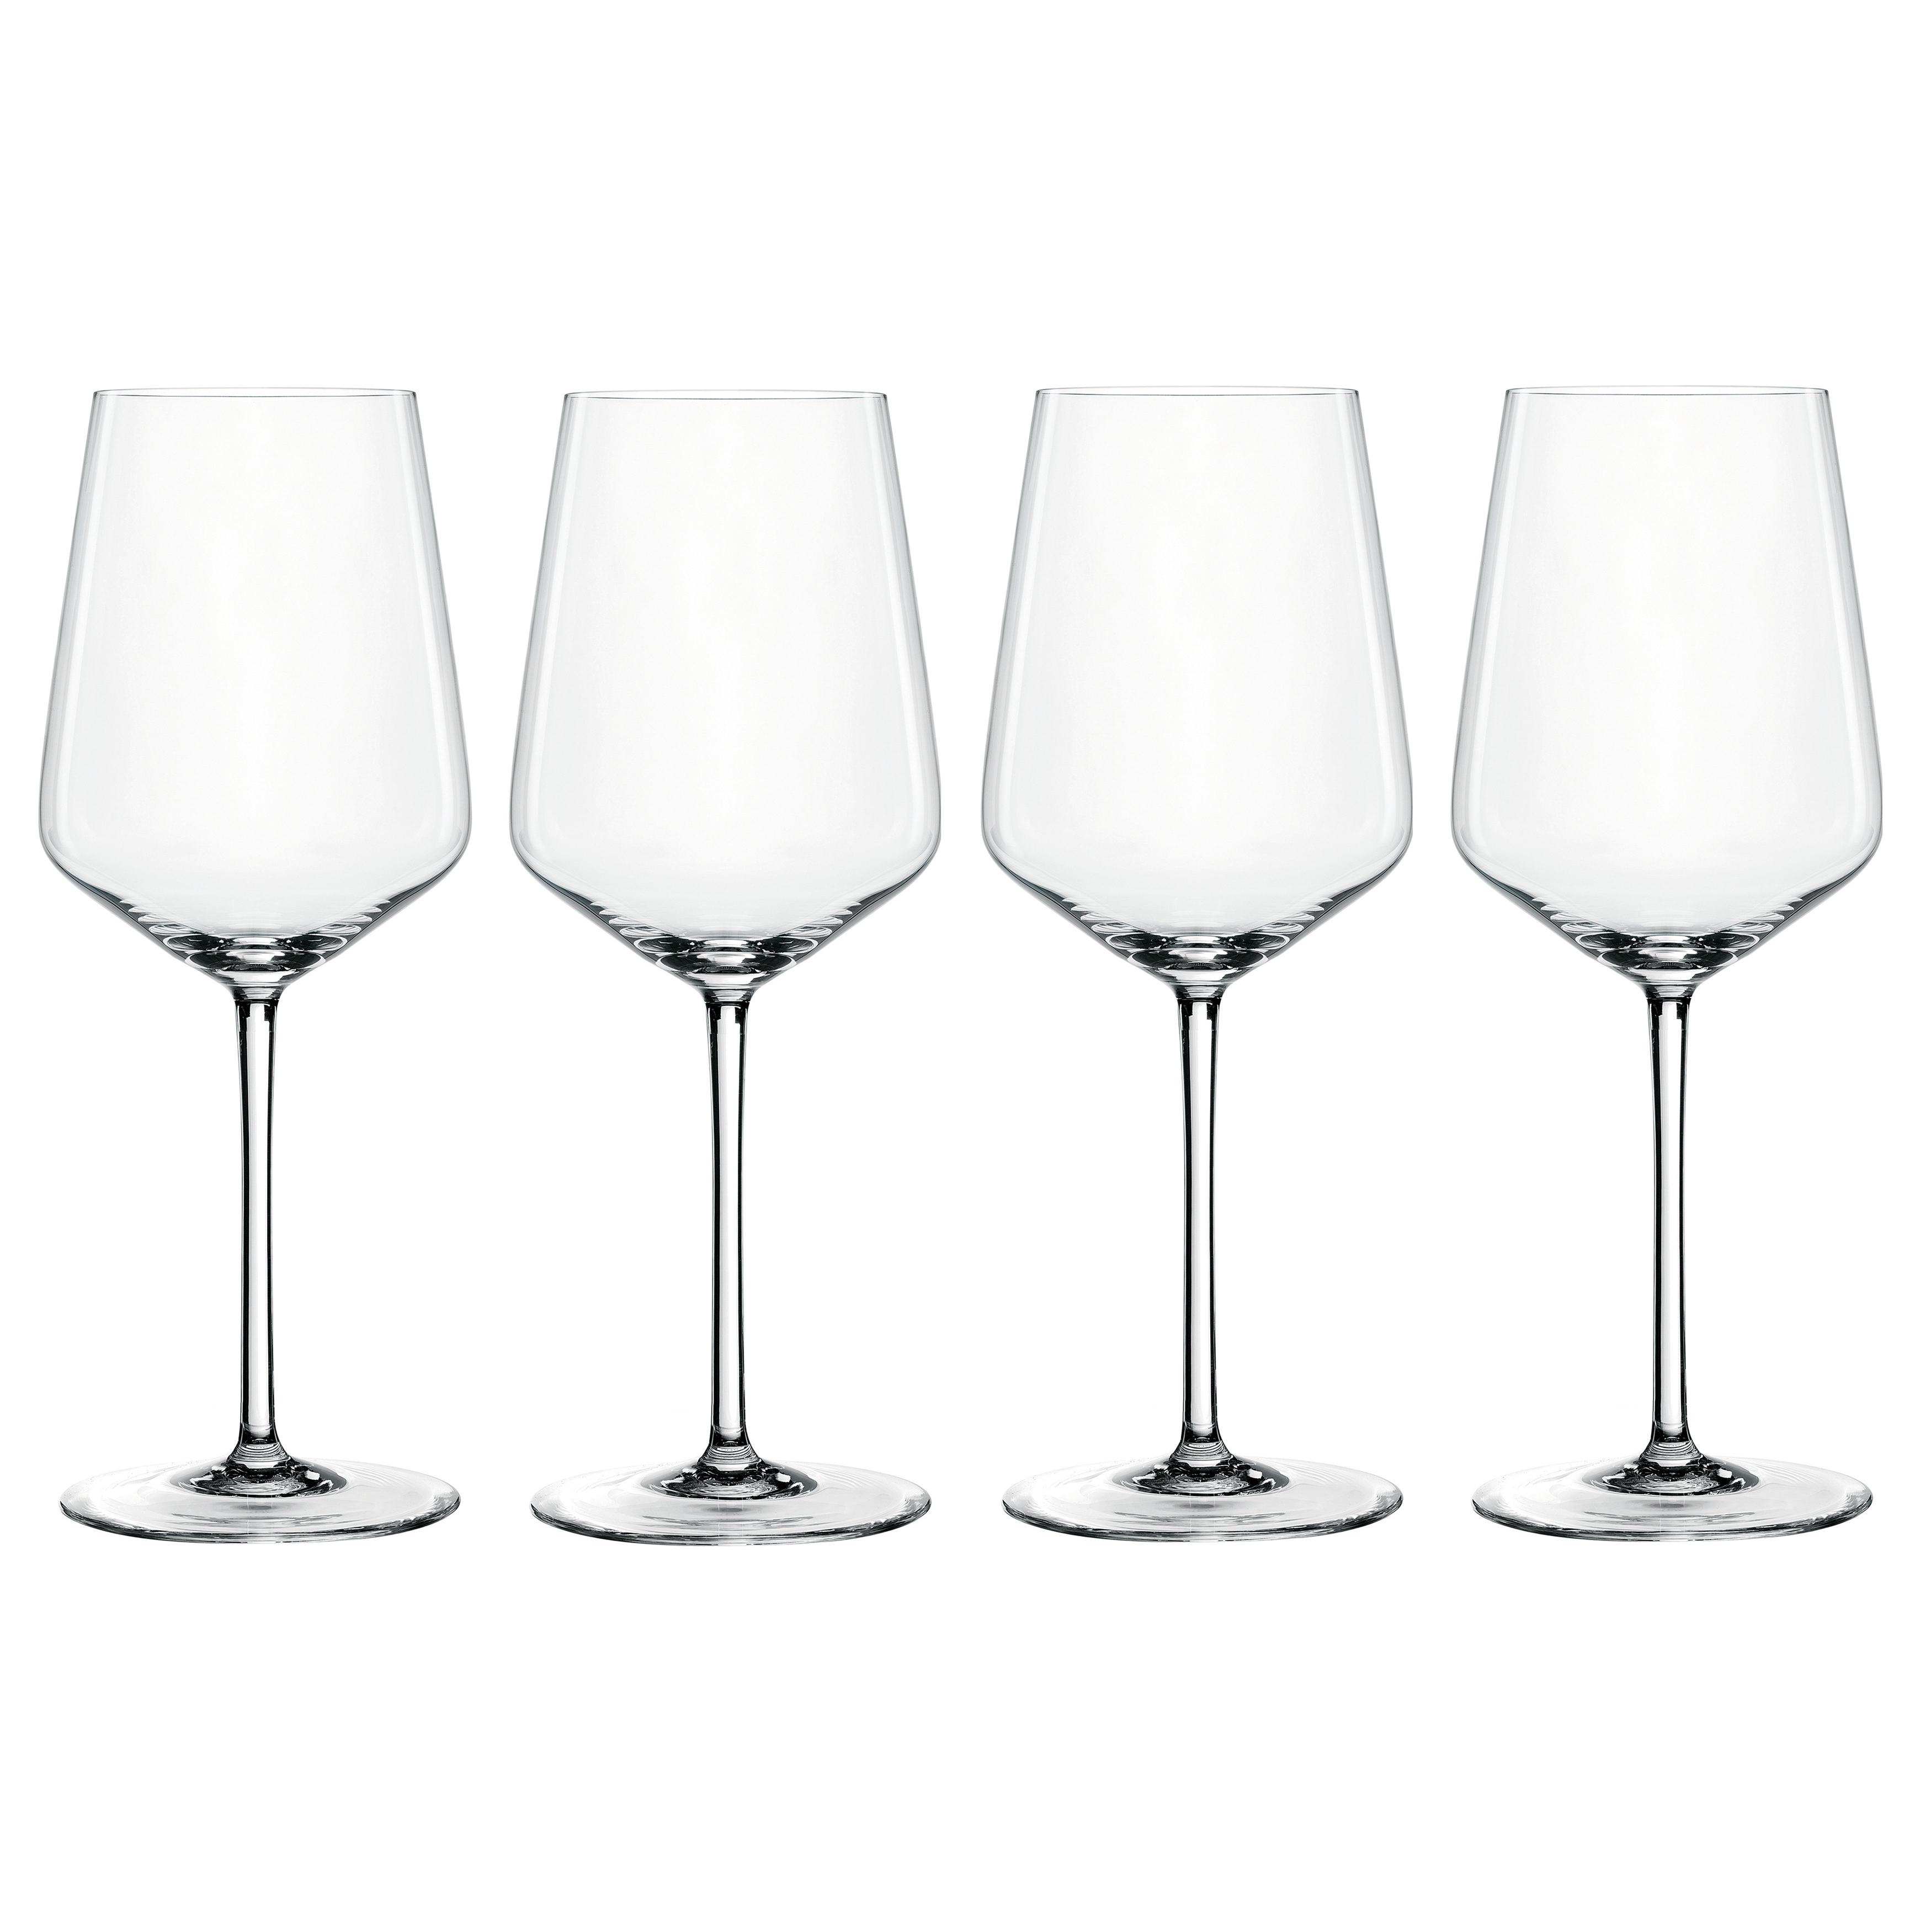 https://www.nordicnest.com/assets/blobs/spiegelau-style-white-wine-glass-4-pack-44-cl/502379-01_1_ProductImageMain-ea75411654.jpg